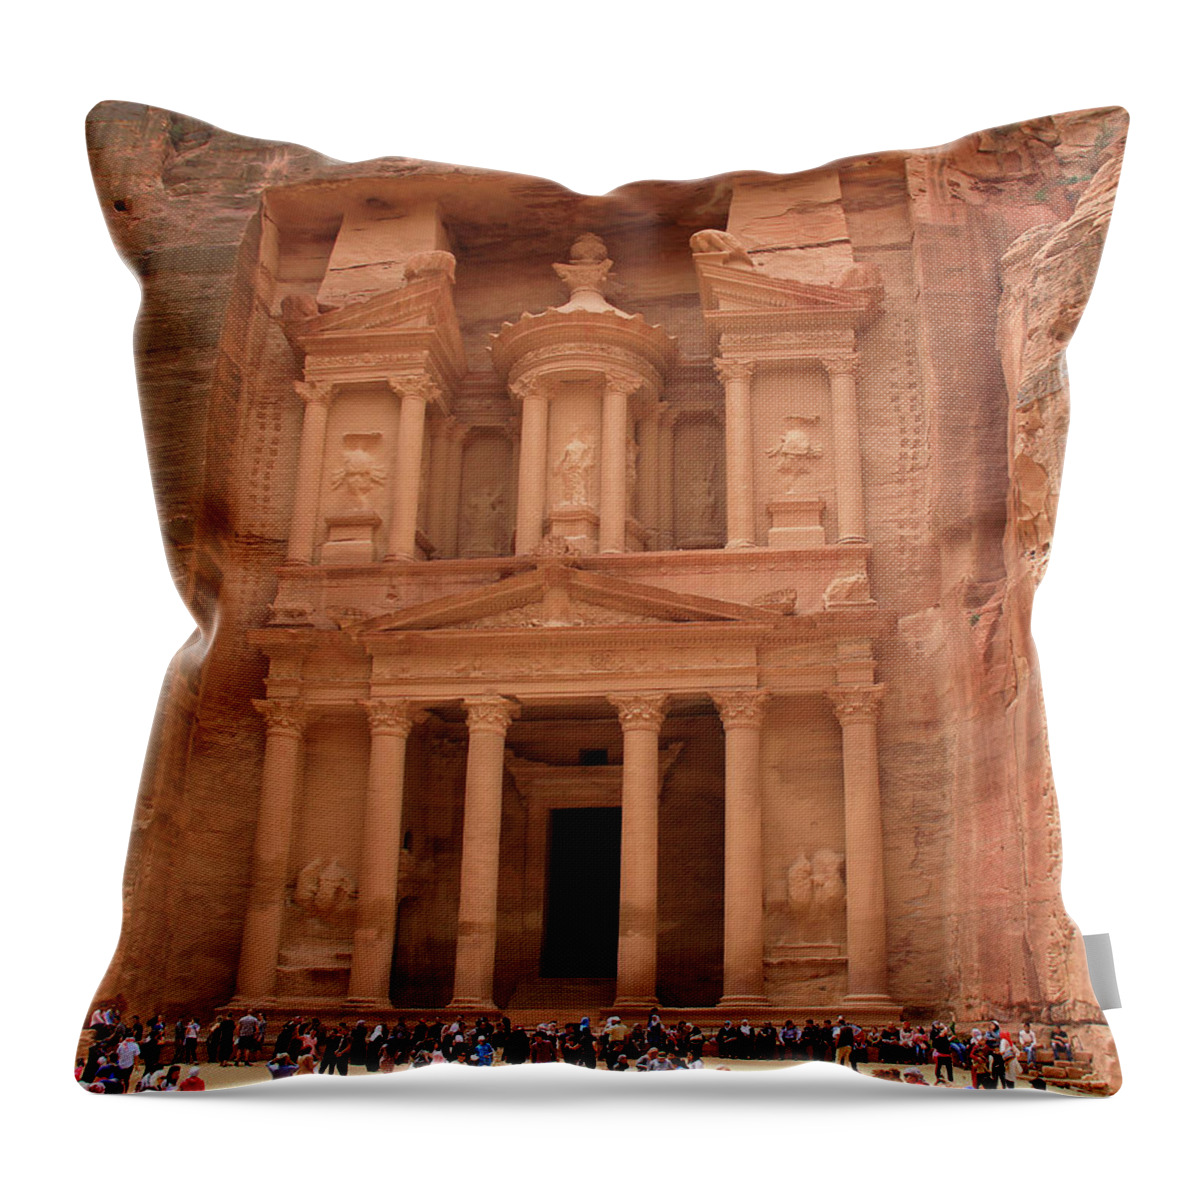 Petra Throw Pillow featuring the photograph Petra, Jordan - The Treasury by Richard Krebs